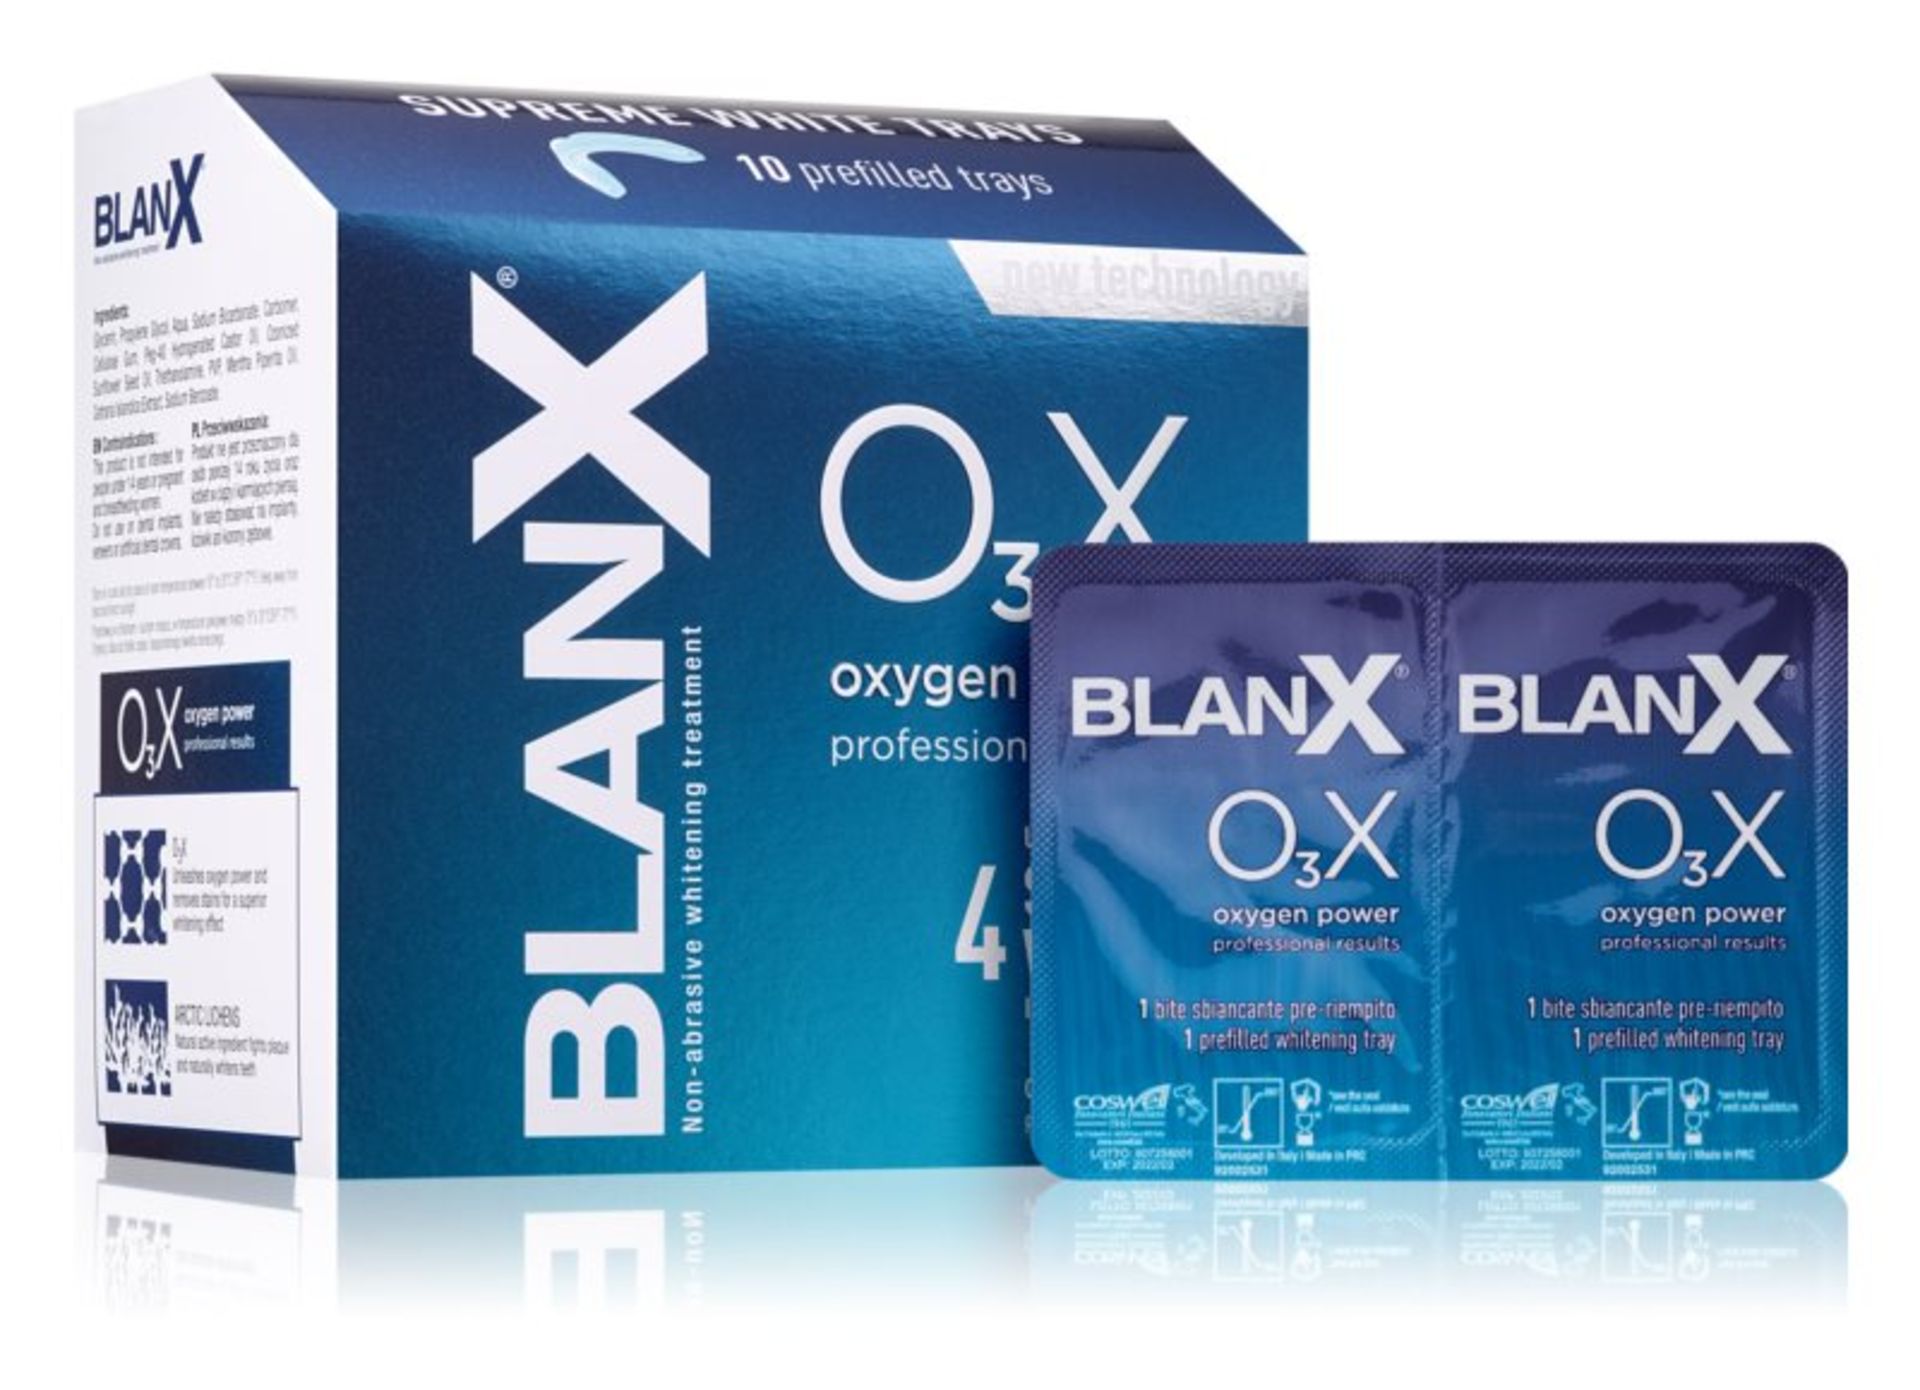 Blanx Non-abrasive whitening treatment Supreme White Trays 03X Oxygen Power x240 pallet RRP £20...